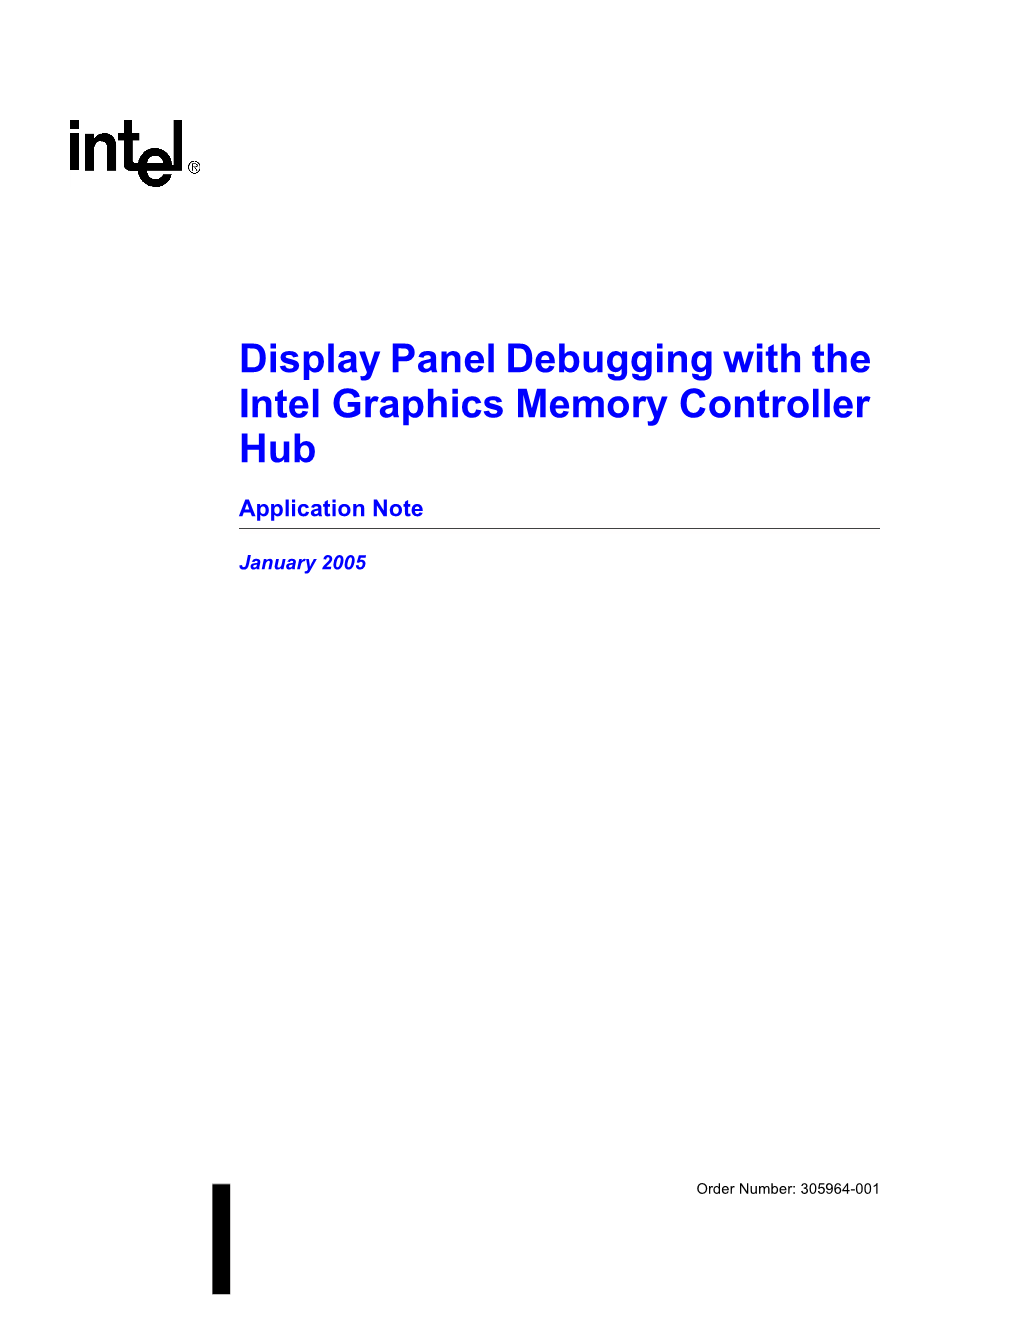 Display Panel Debugging with the Intel Graphics Memory Controller Hub